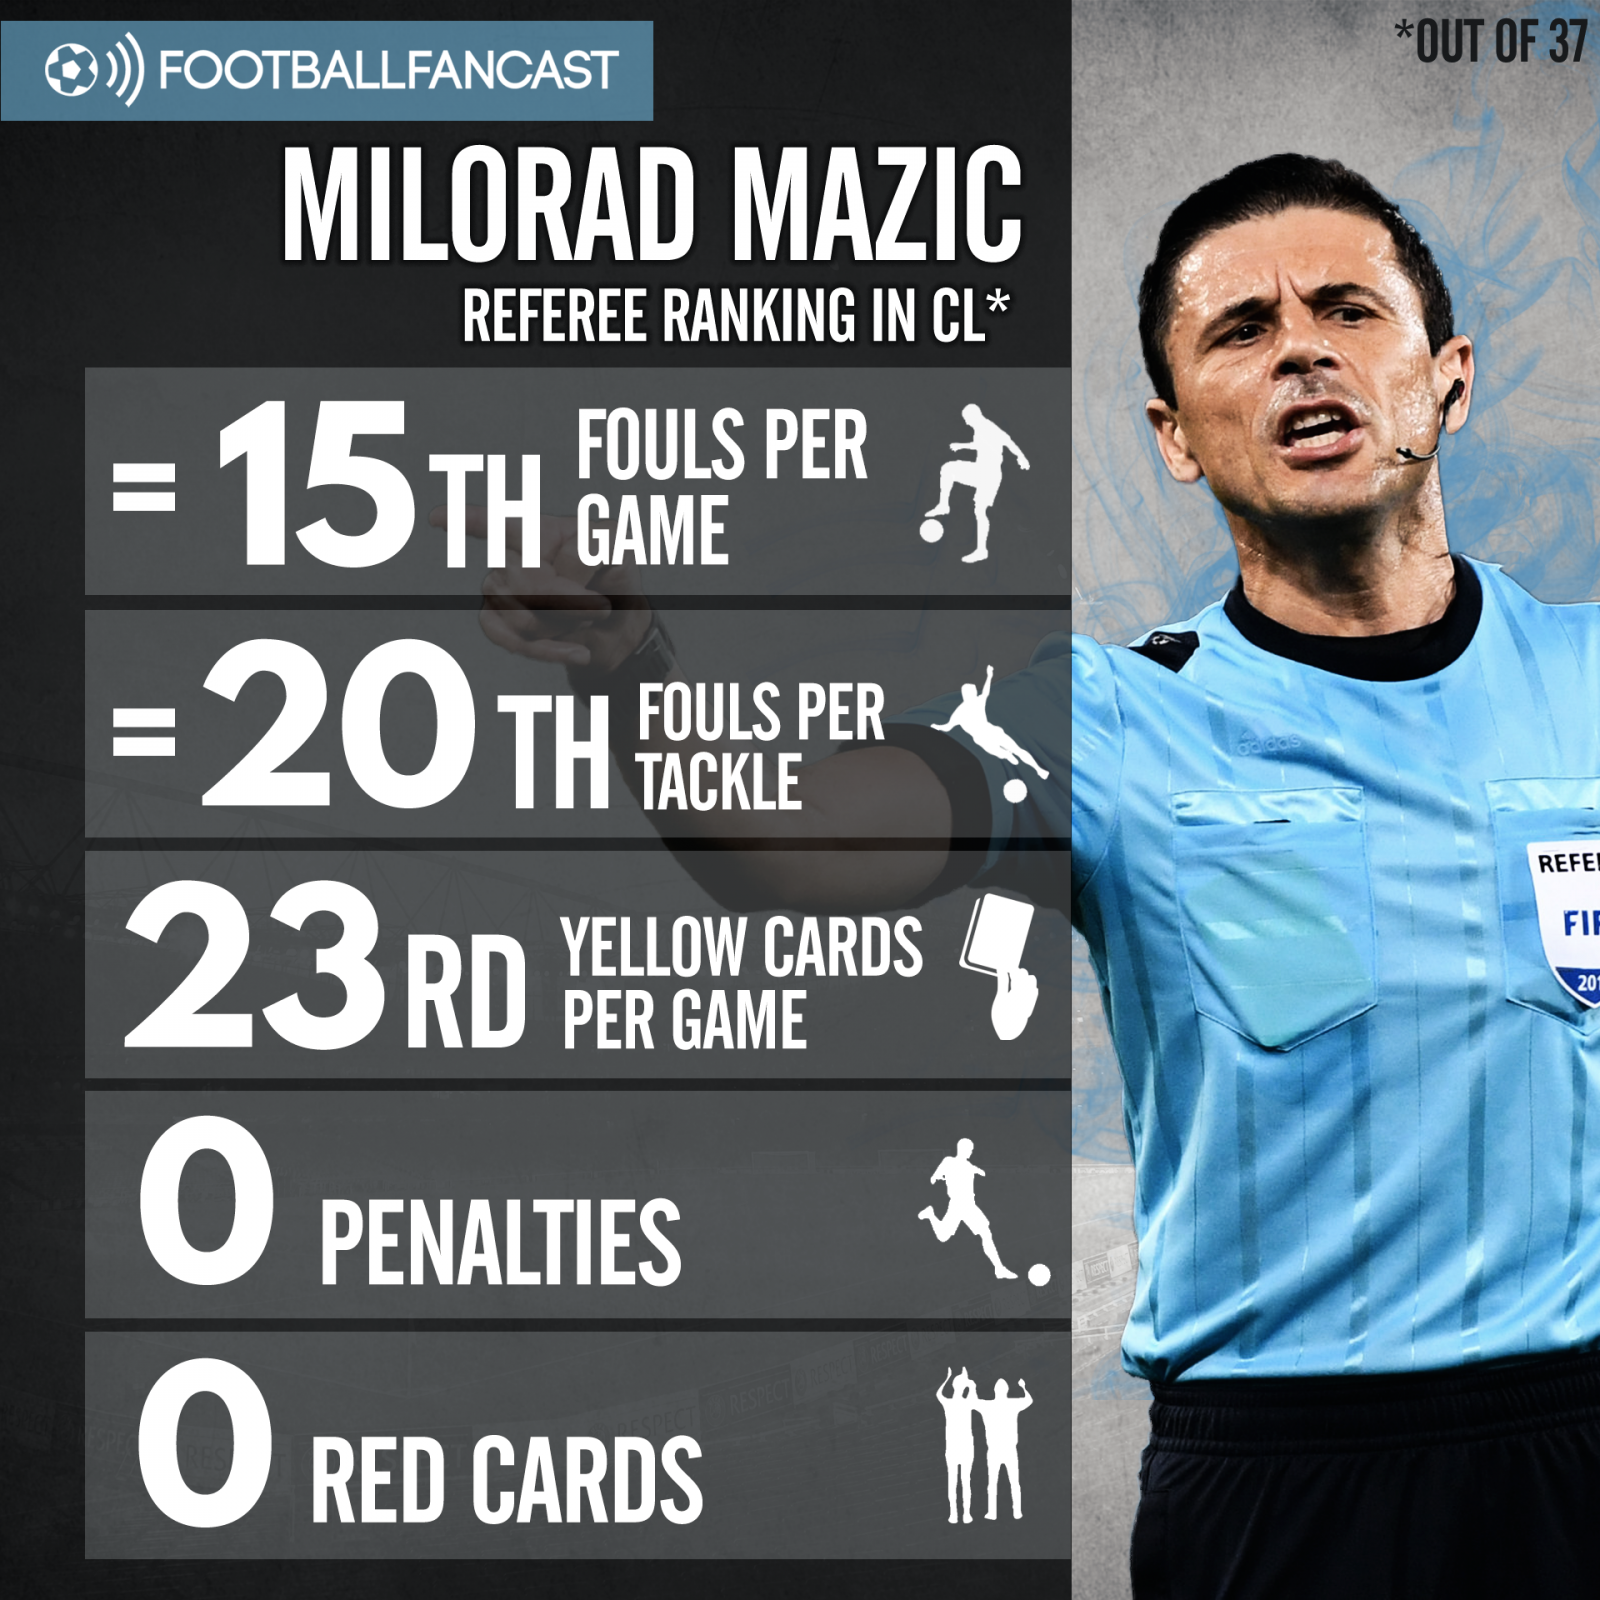 Milorad Mazic's referee ranking in the CL this season